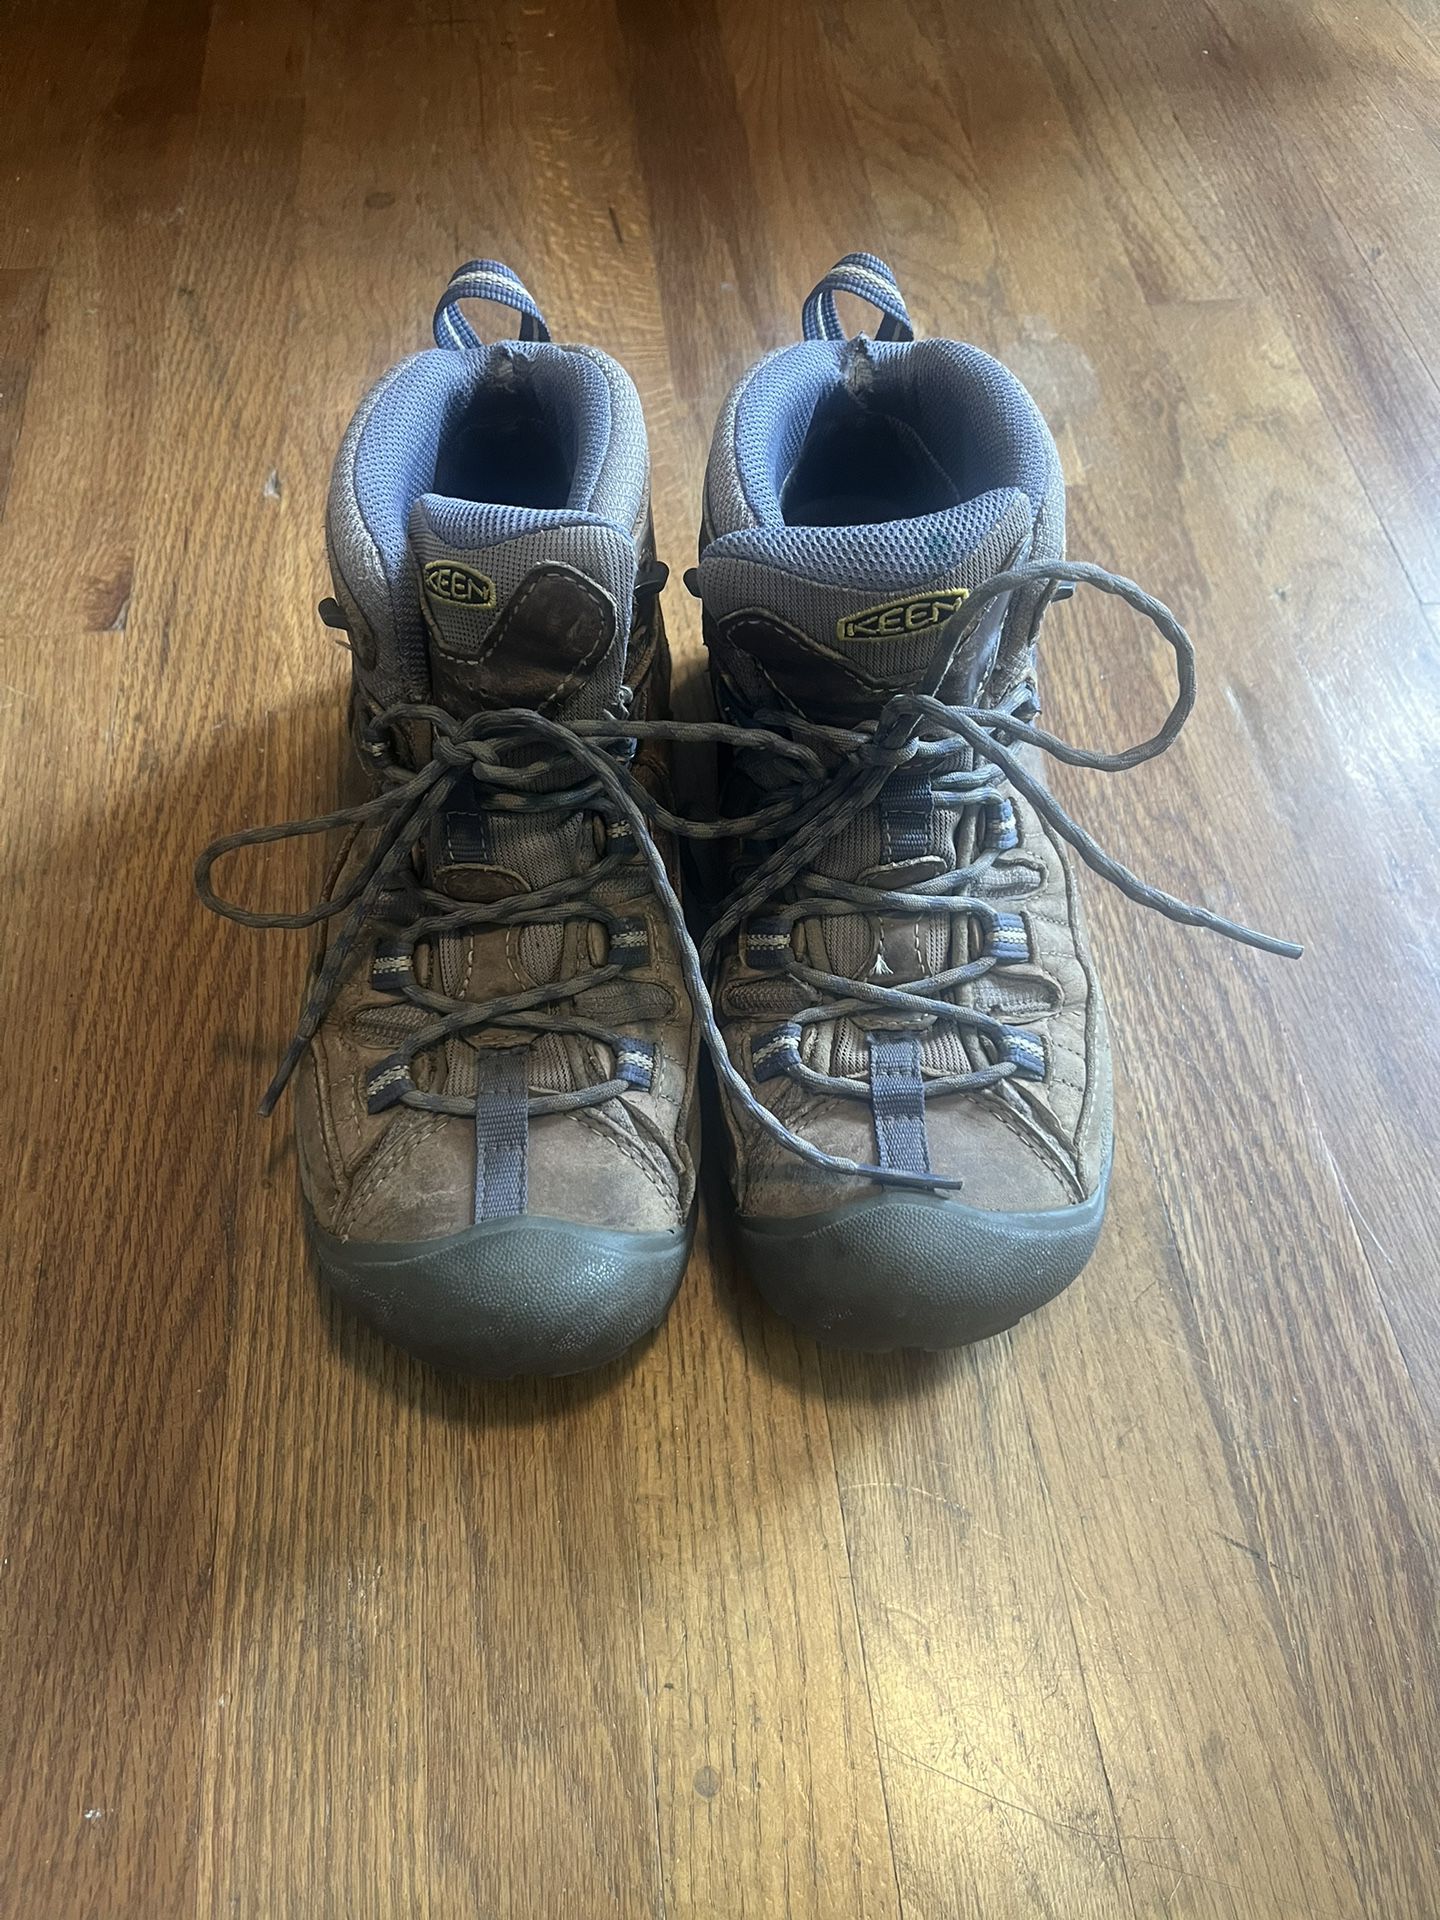 Keen Targhee II Mid Height Waterproof Hiking Boot